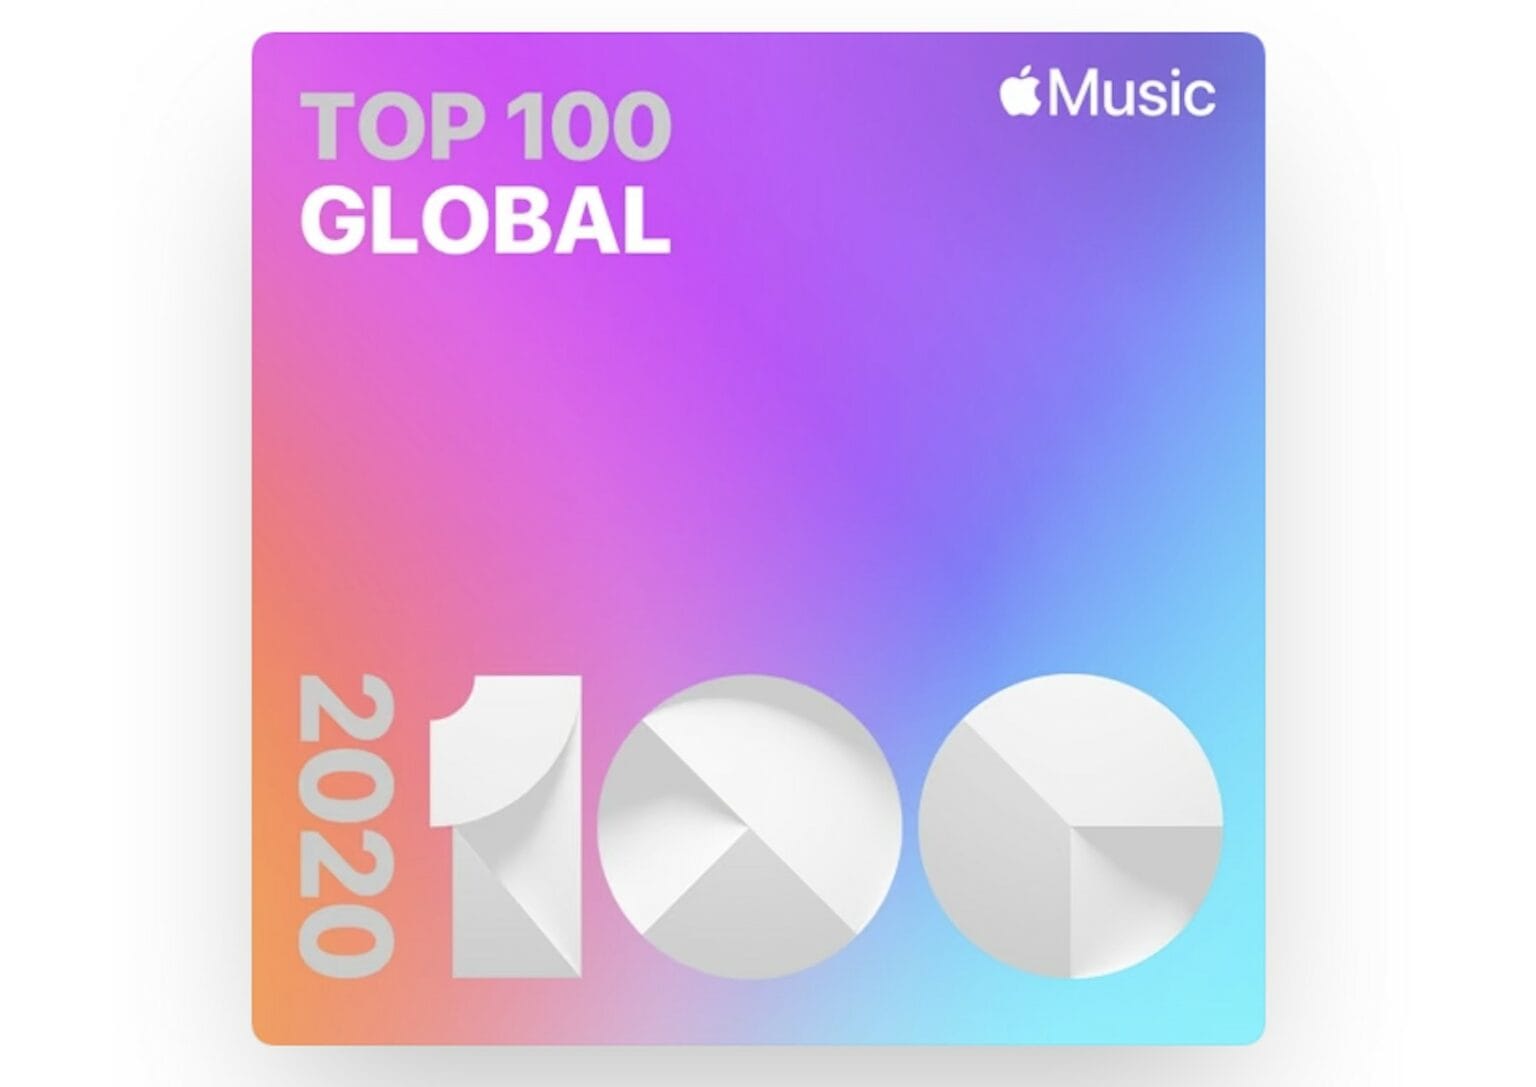 2020 in Apple Music